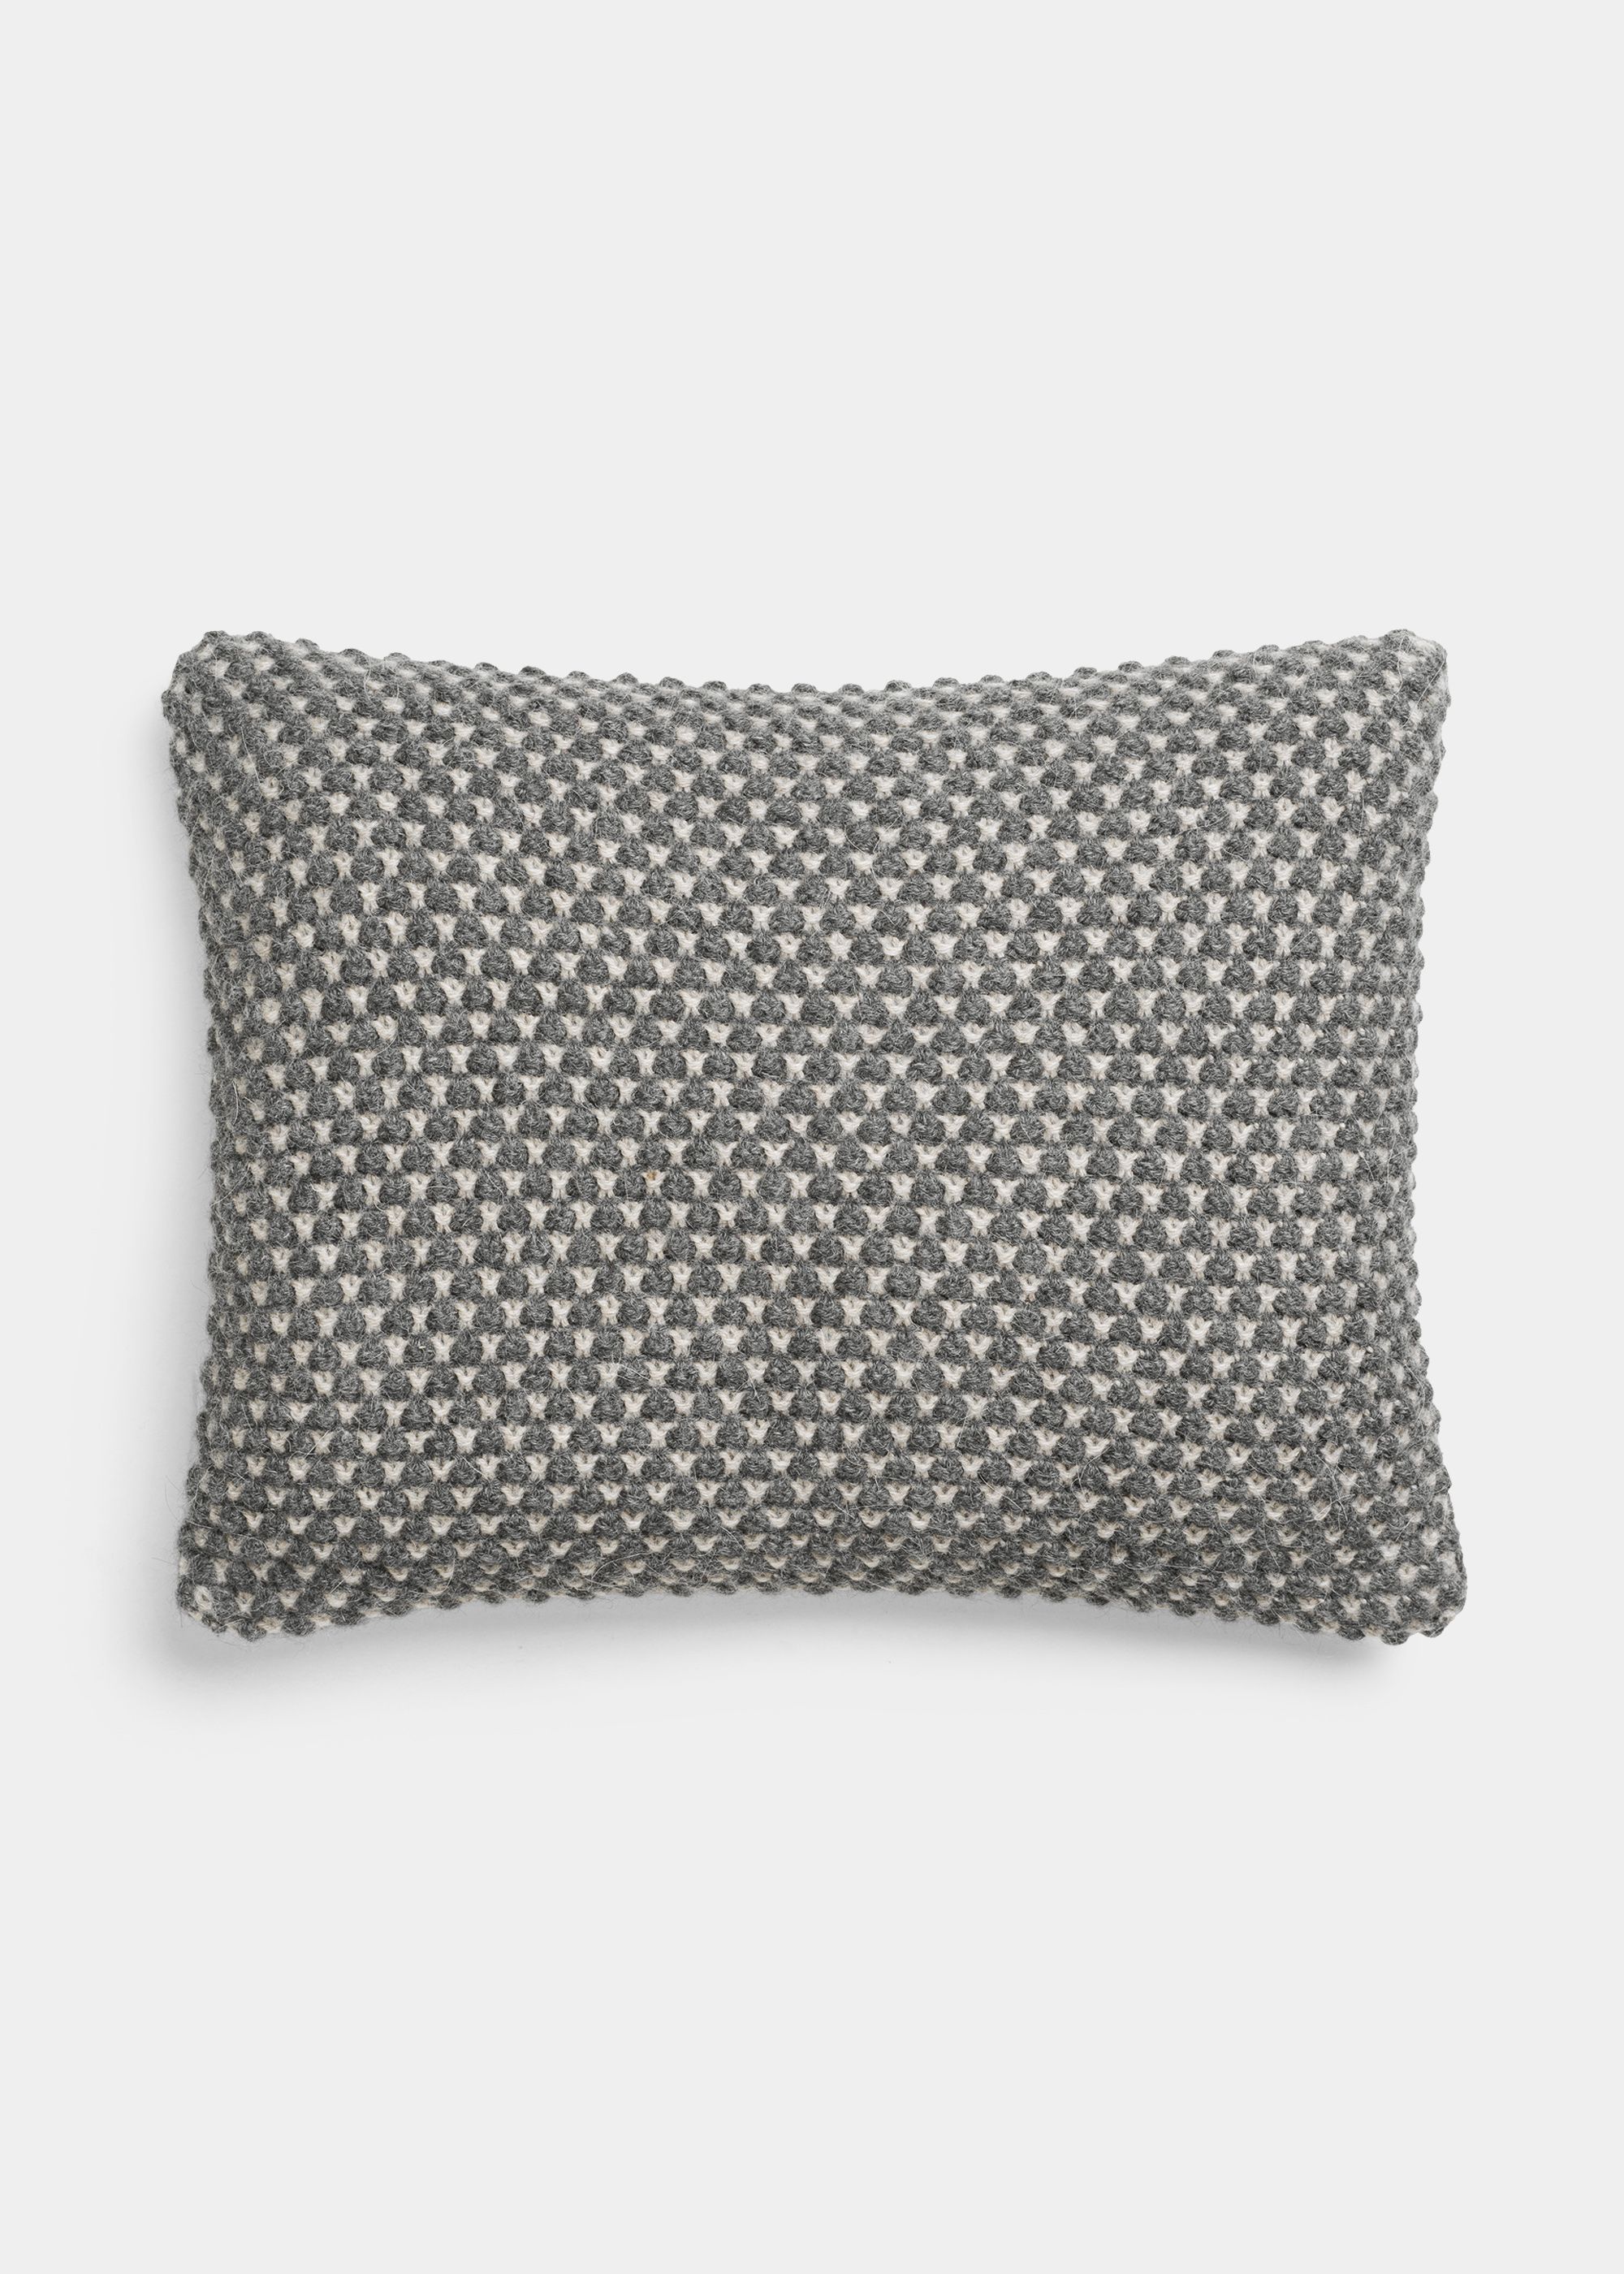 Cushions - Heather Classic Cushion (30x40)